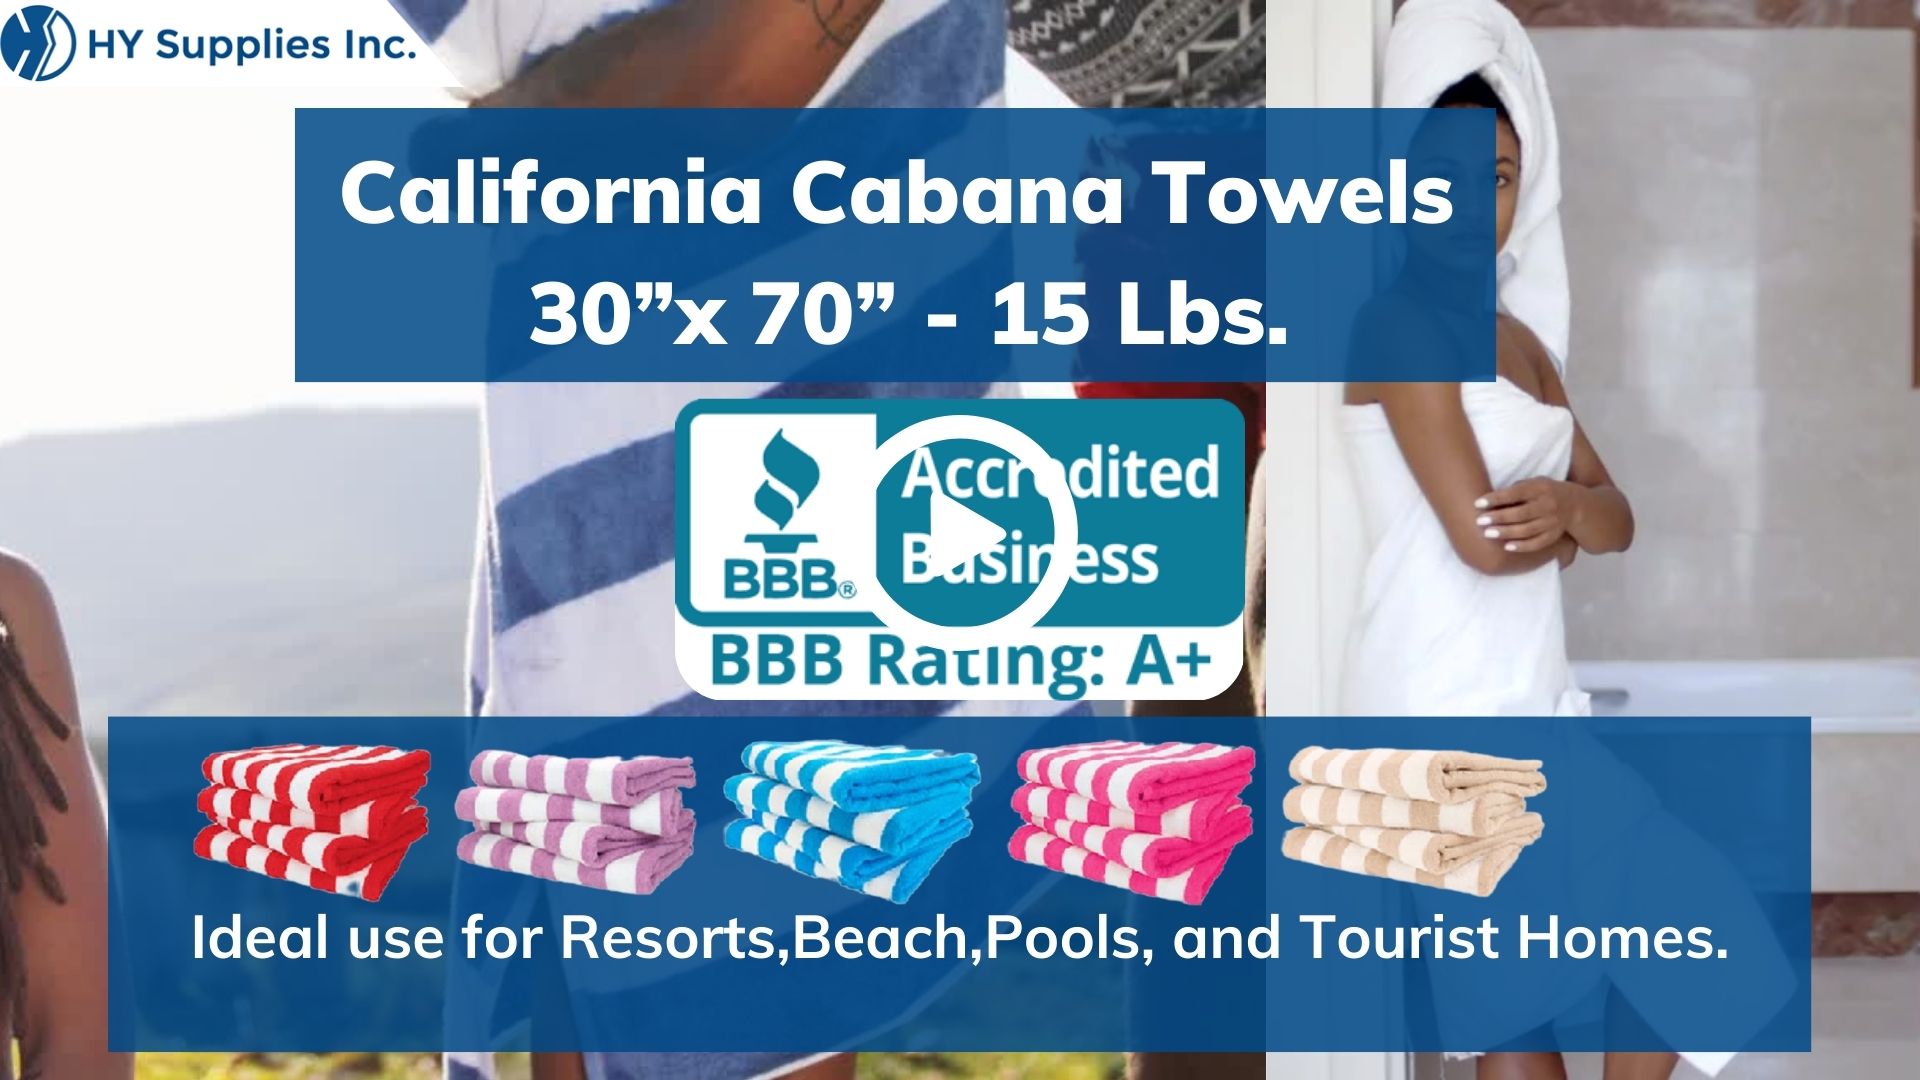 California Cabana Towels - 30" x 70" - 15 Lbs.